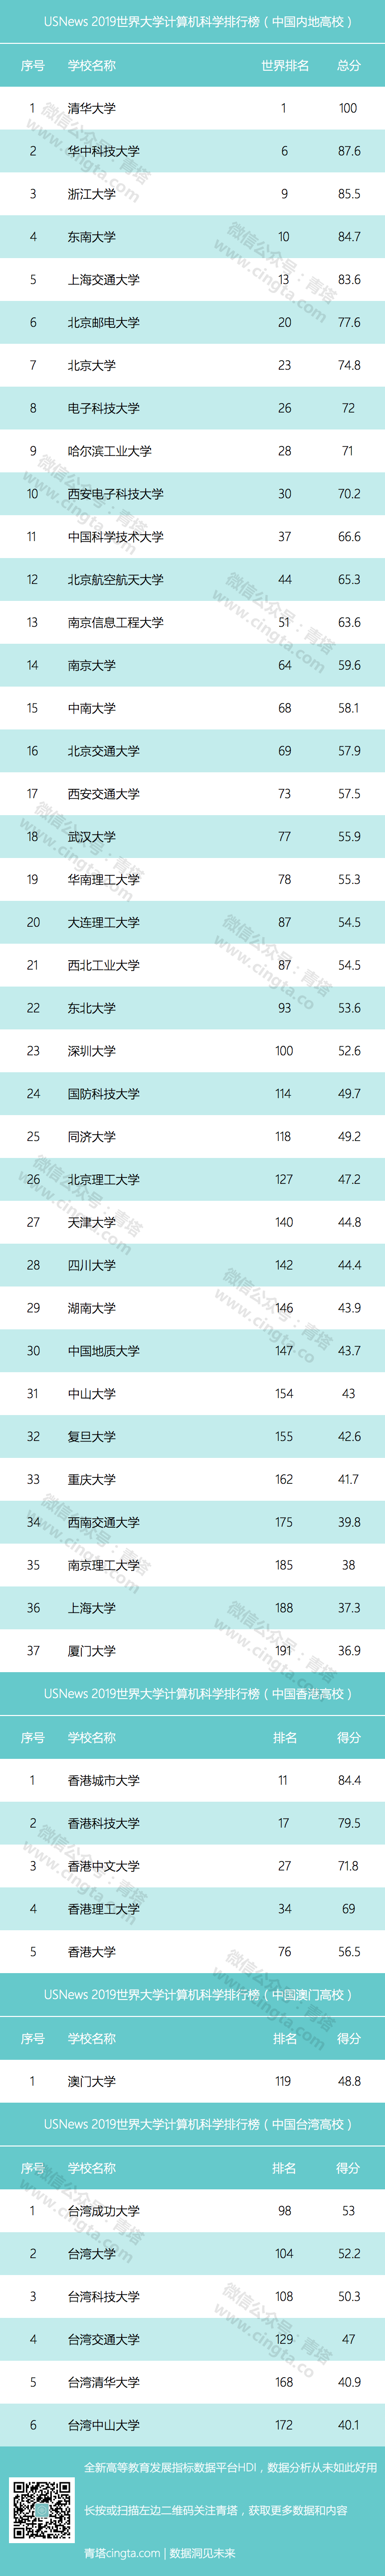 USNews 2019世界大学计算机排行榜出炉 中国4所高校进入全球前10名2